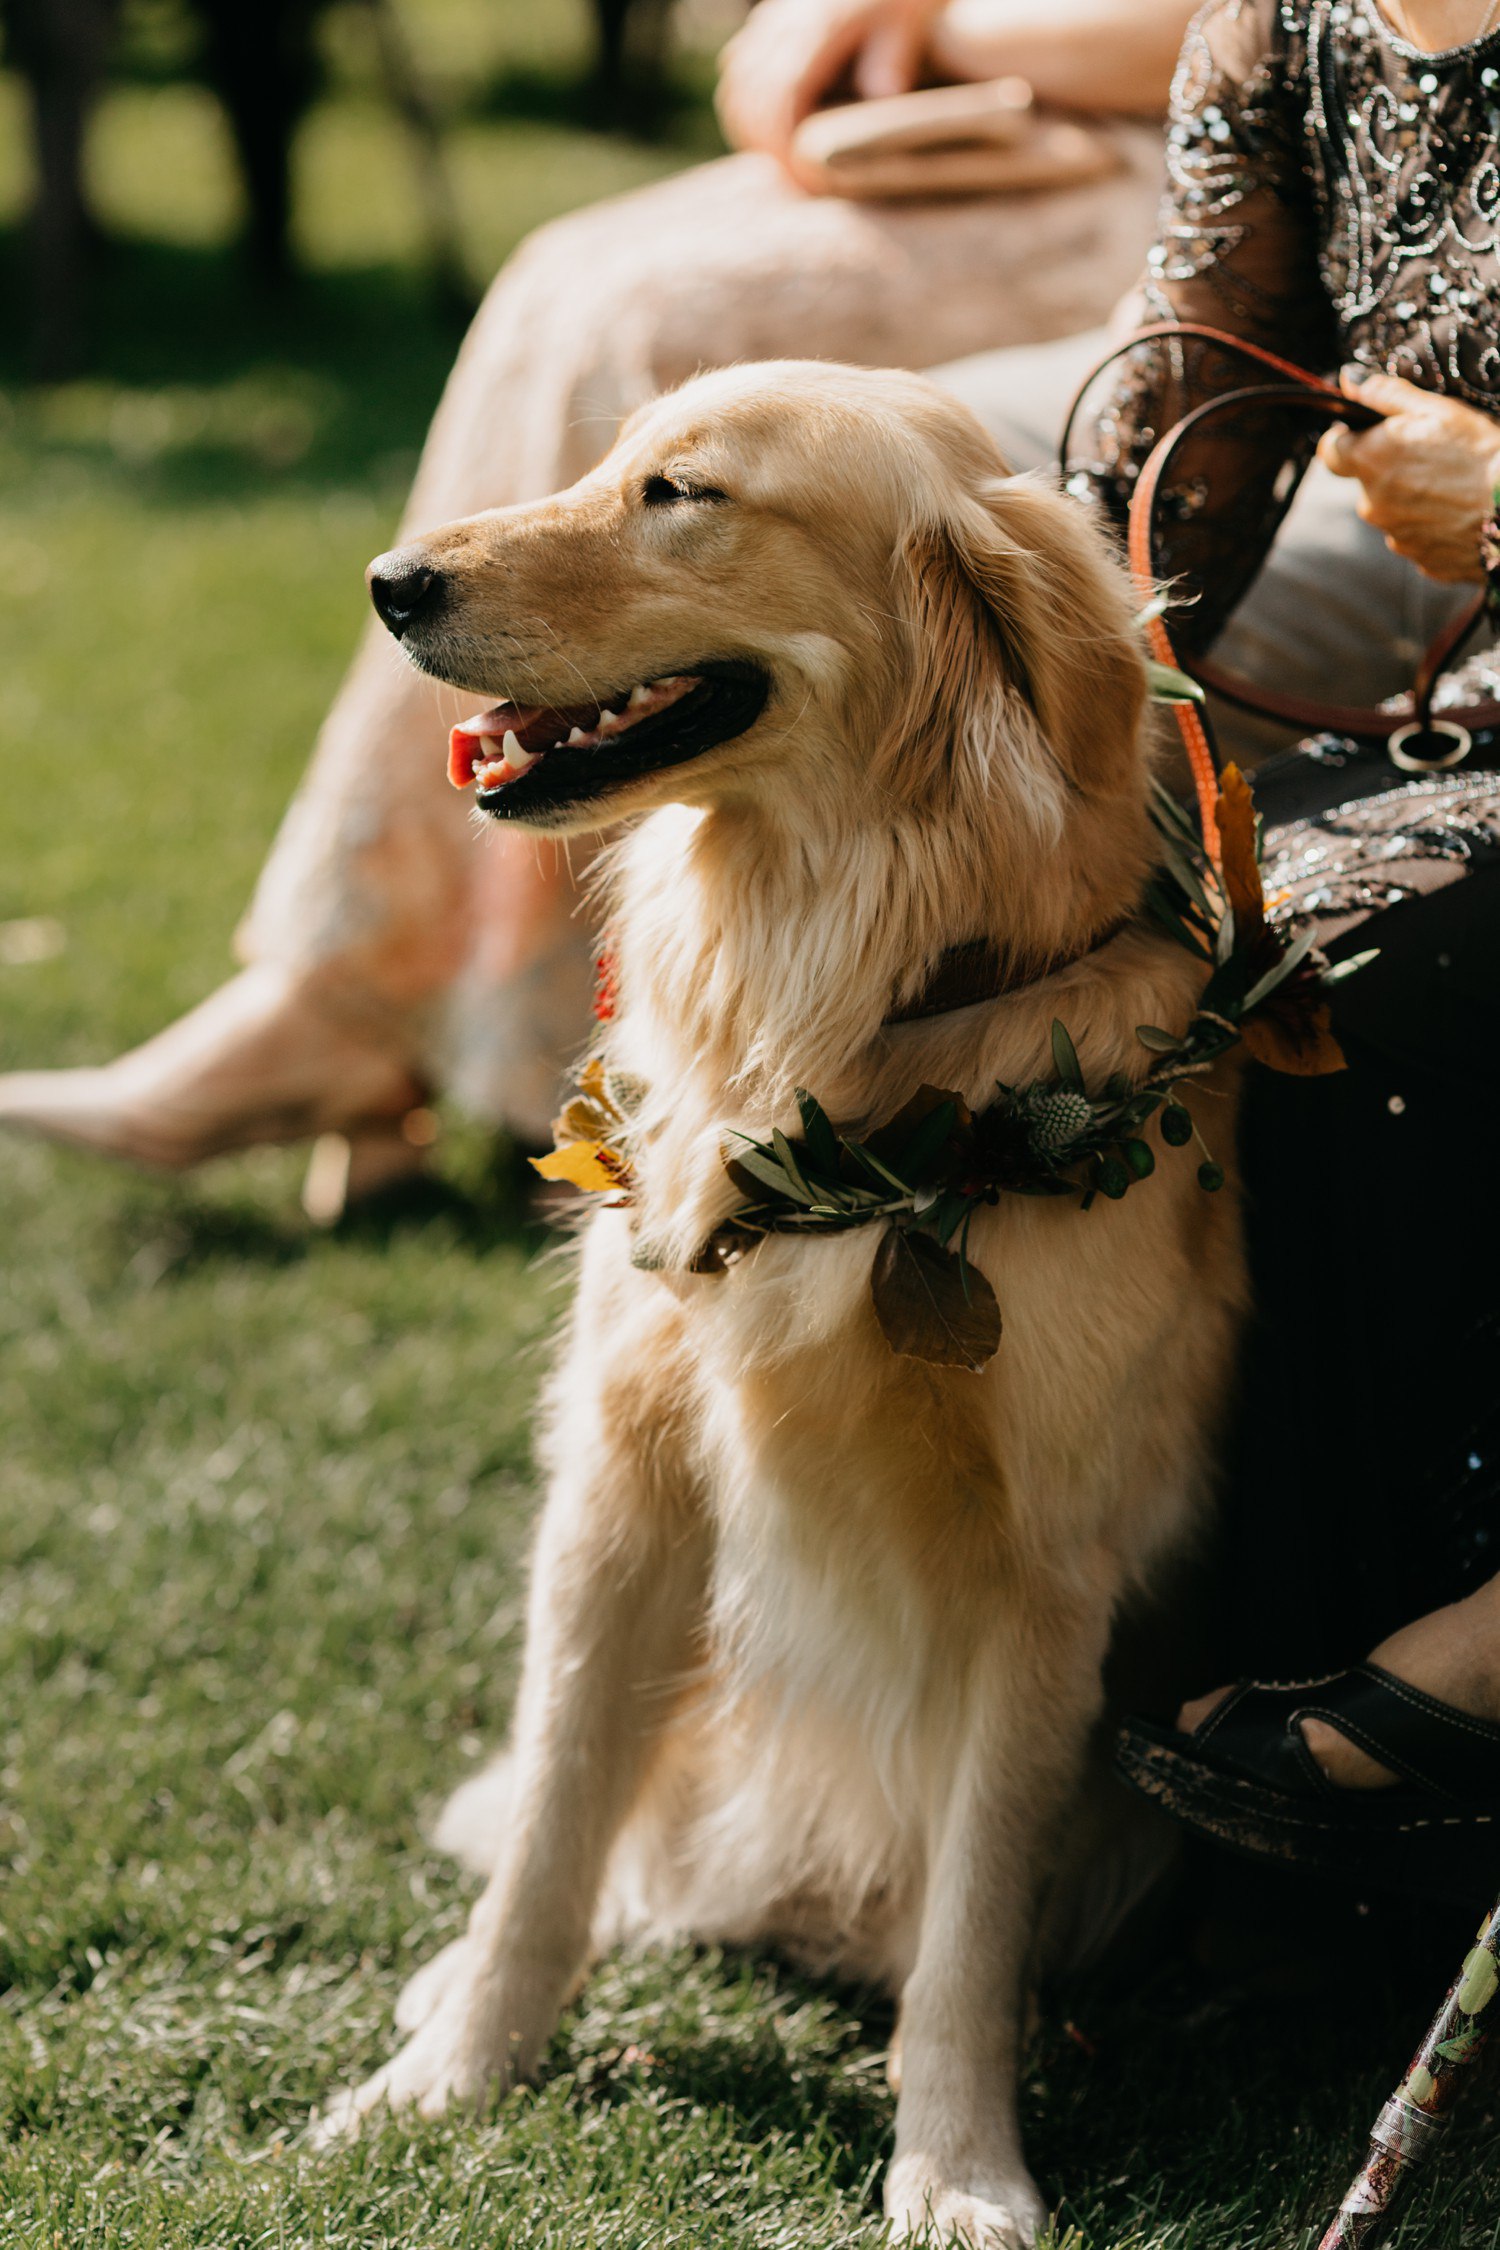 Dog as flower girl at wedding